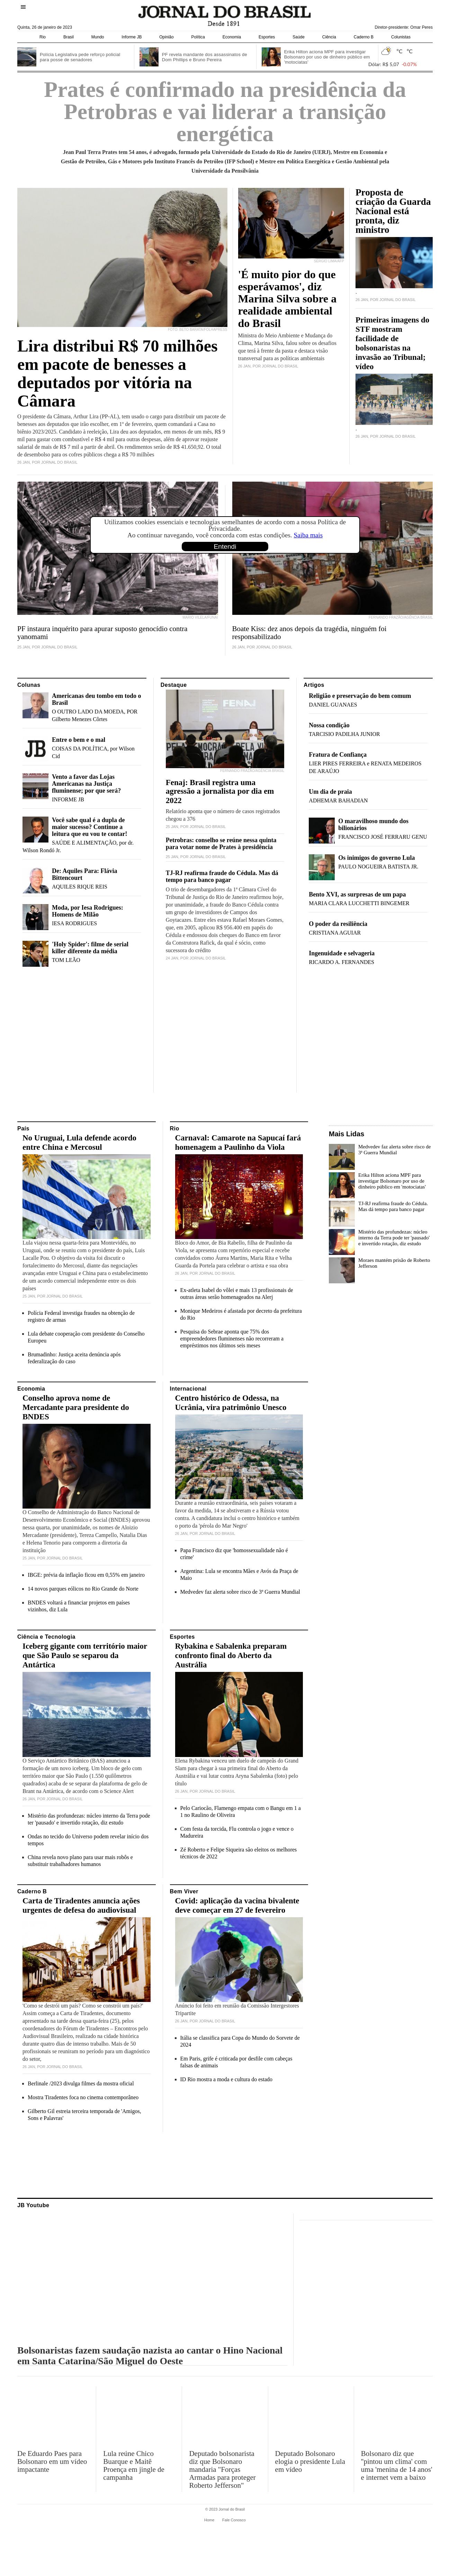 Jornal do Brasil at 2023-01-26 20:14:28-03:00 local time